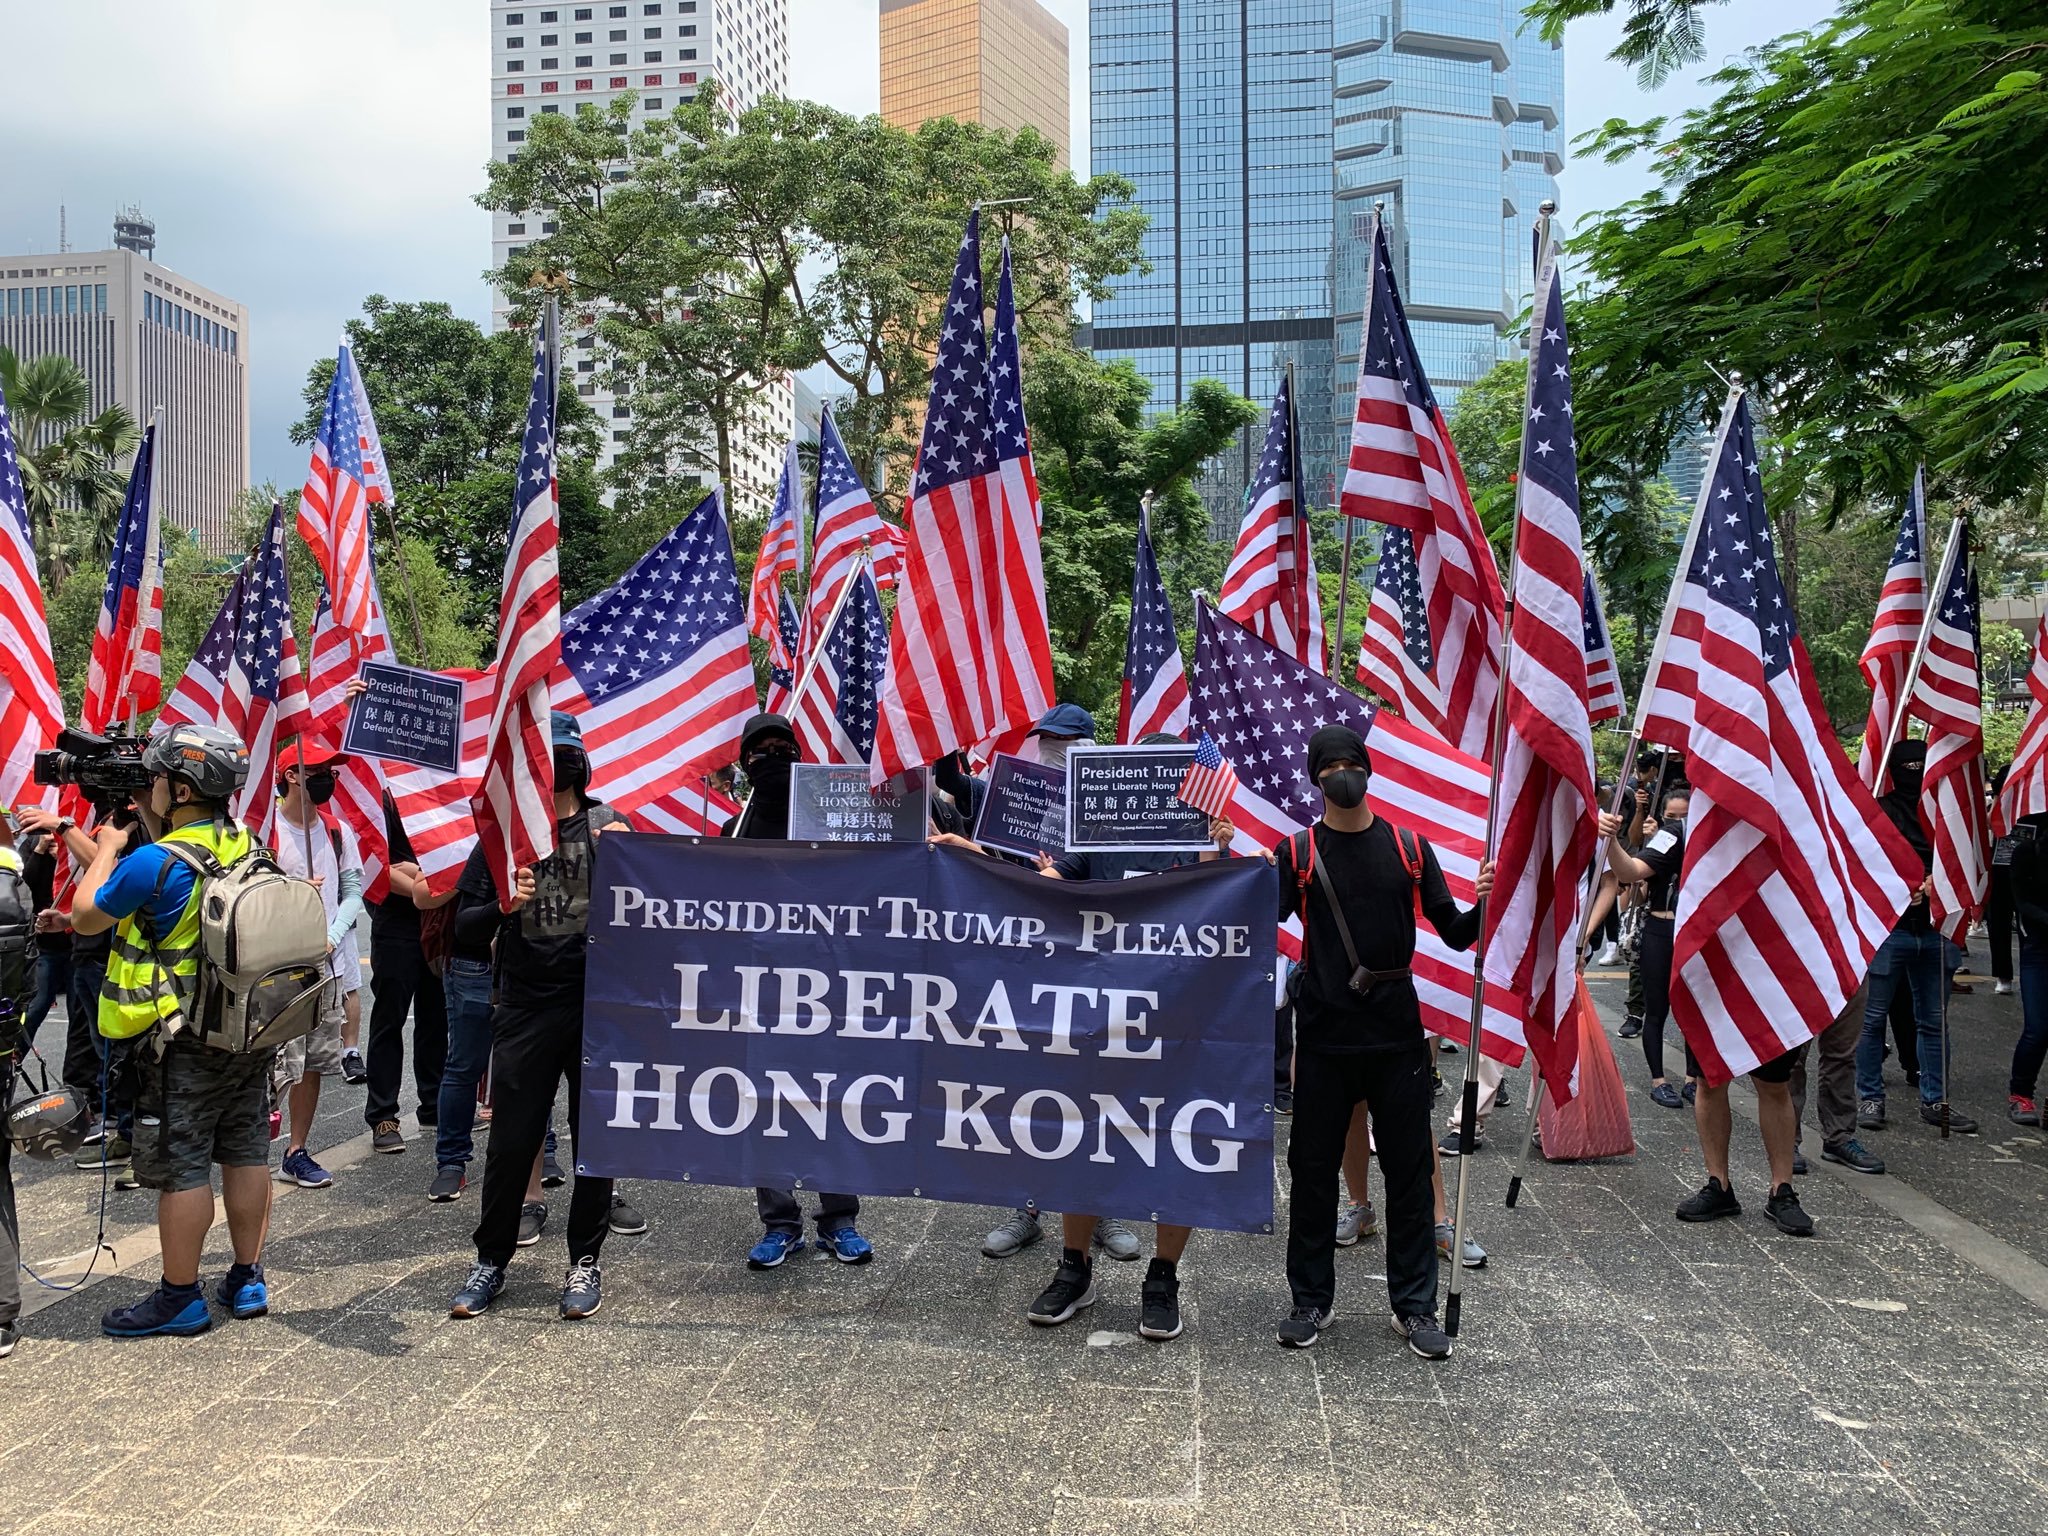 HK Trump Image fair use